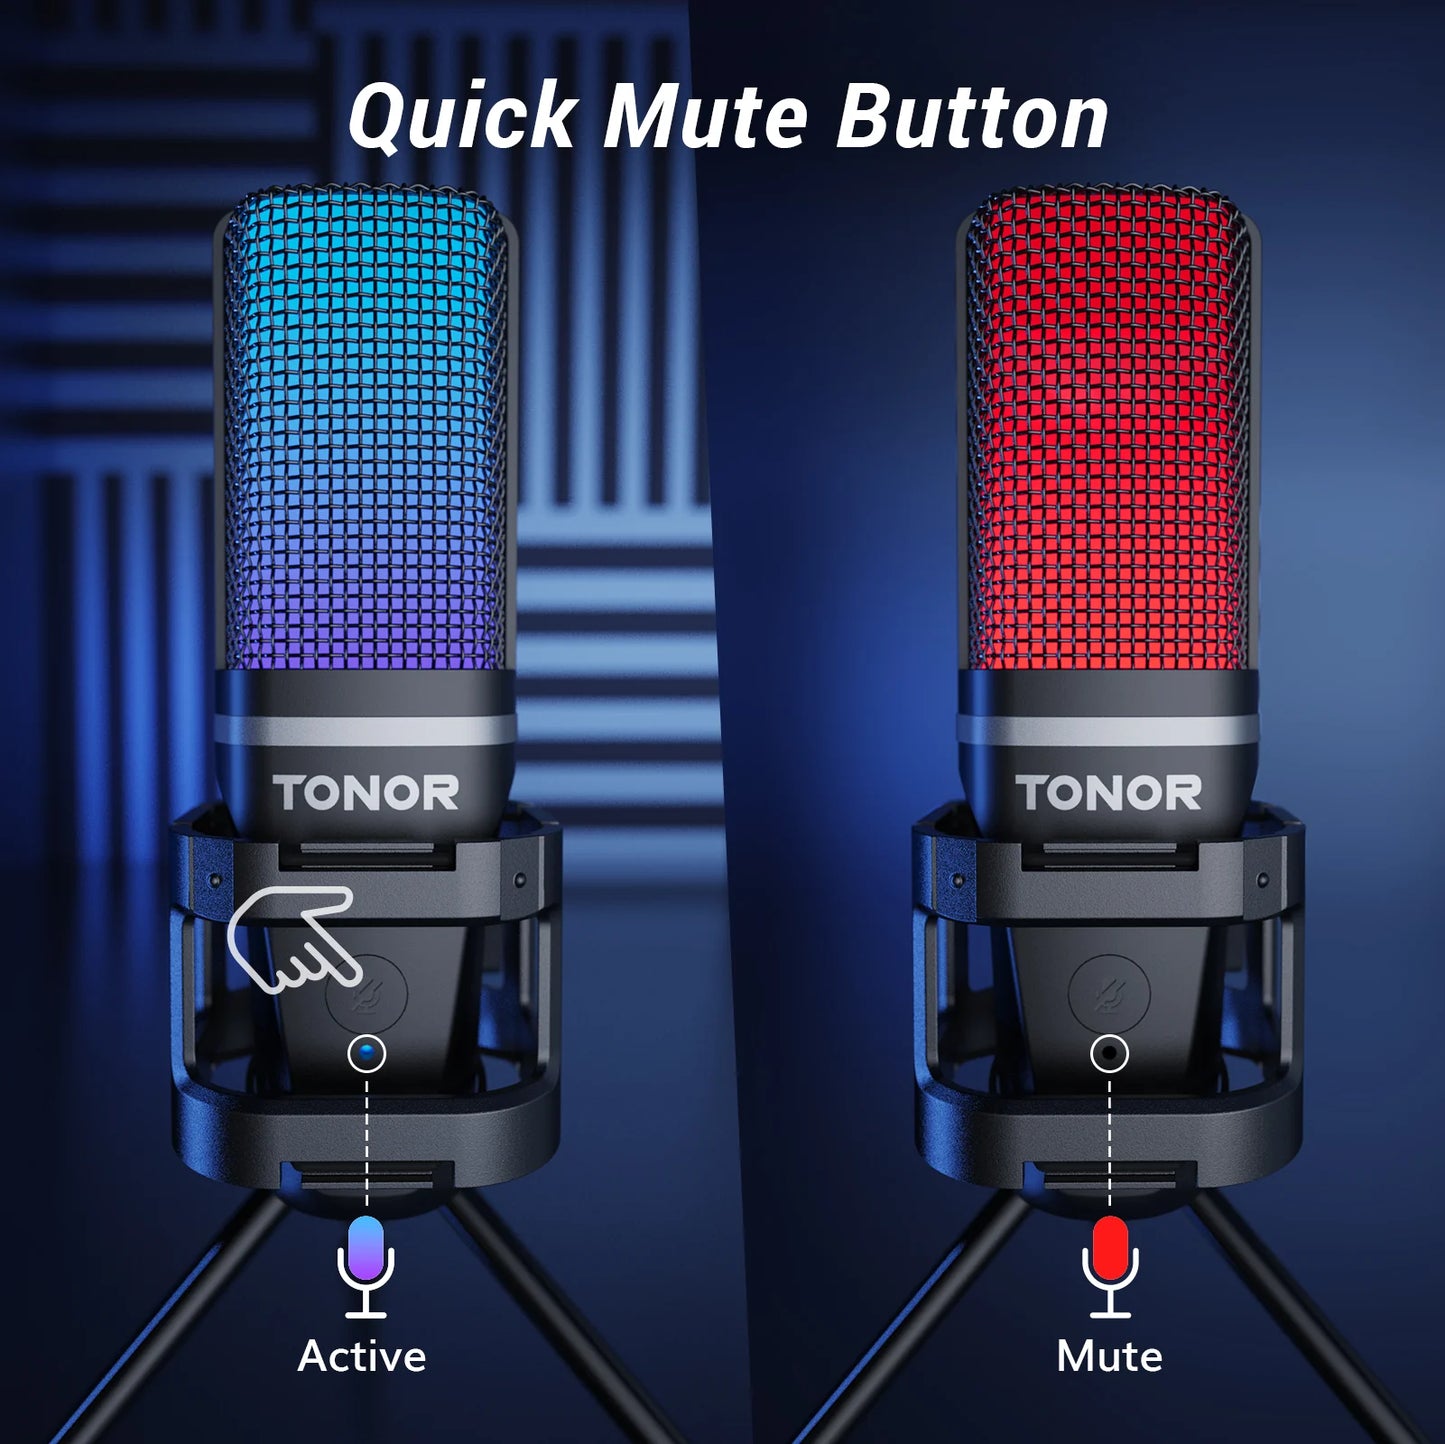 TONOR TC777 PRO RGB USB condenser microphone